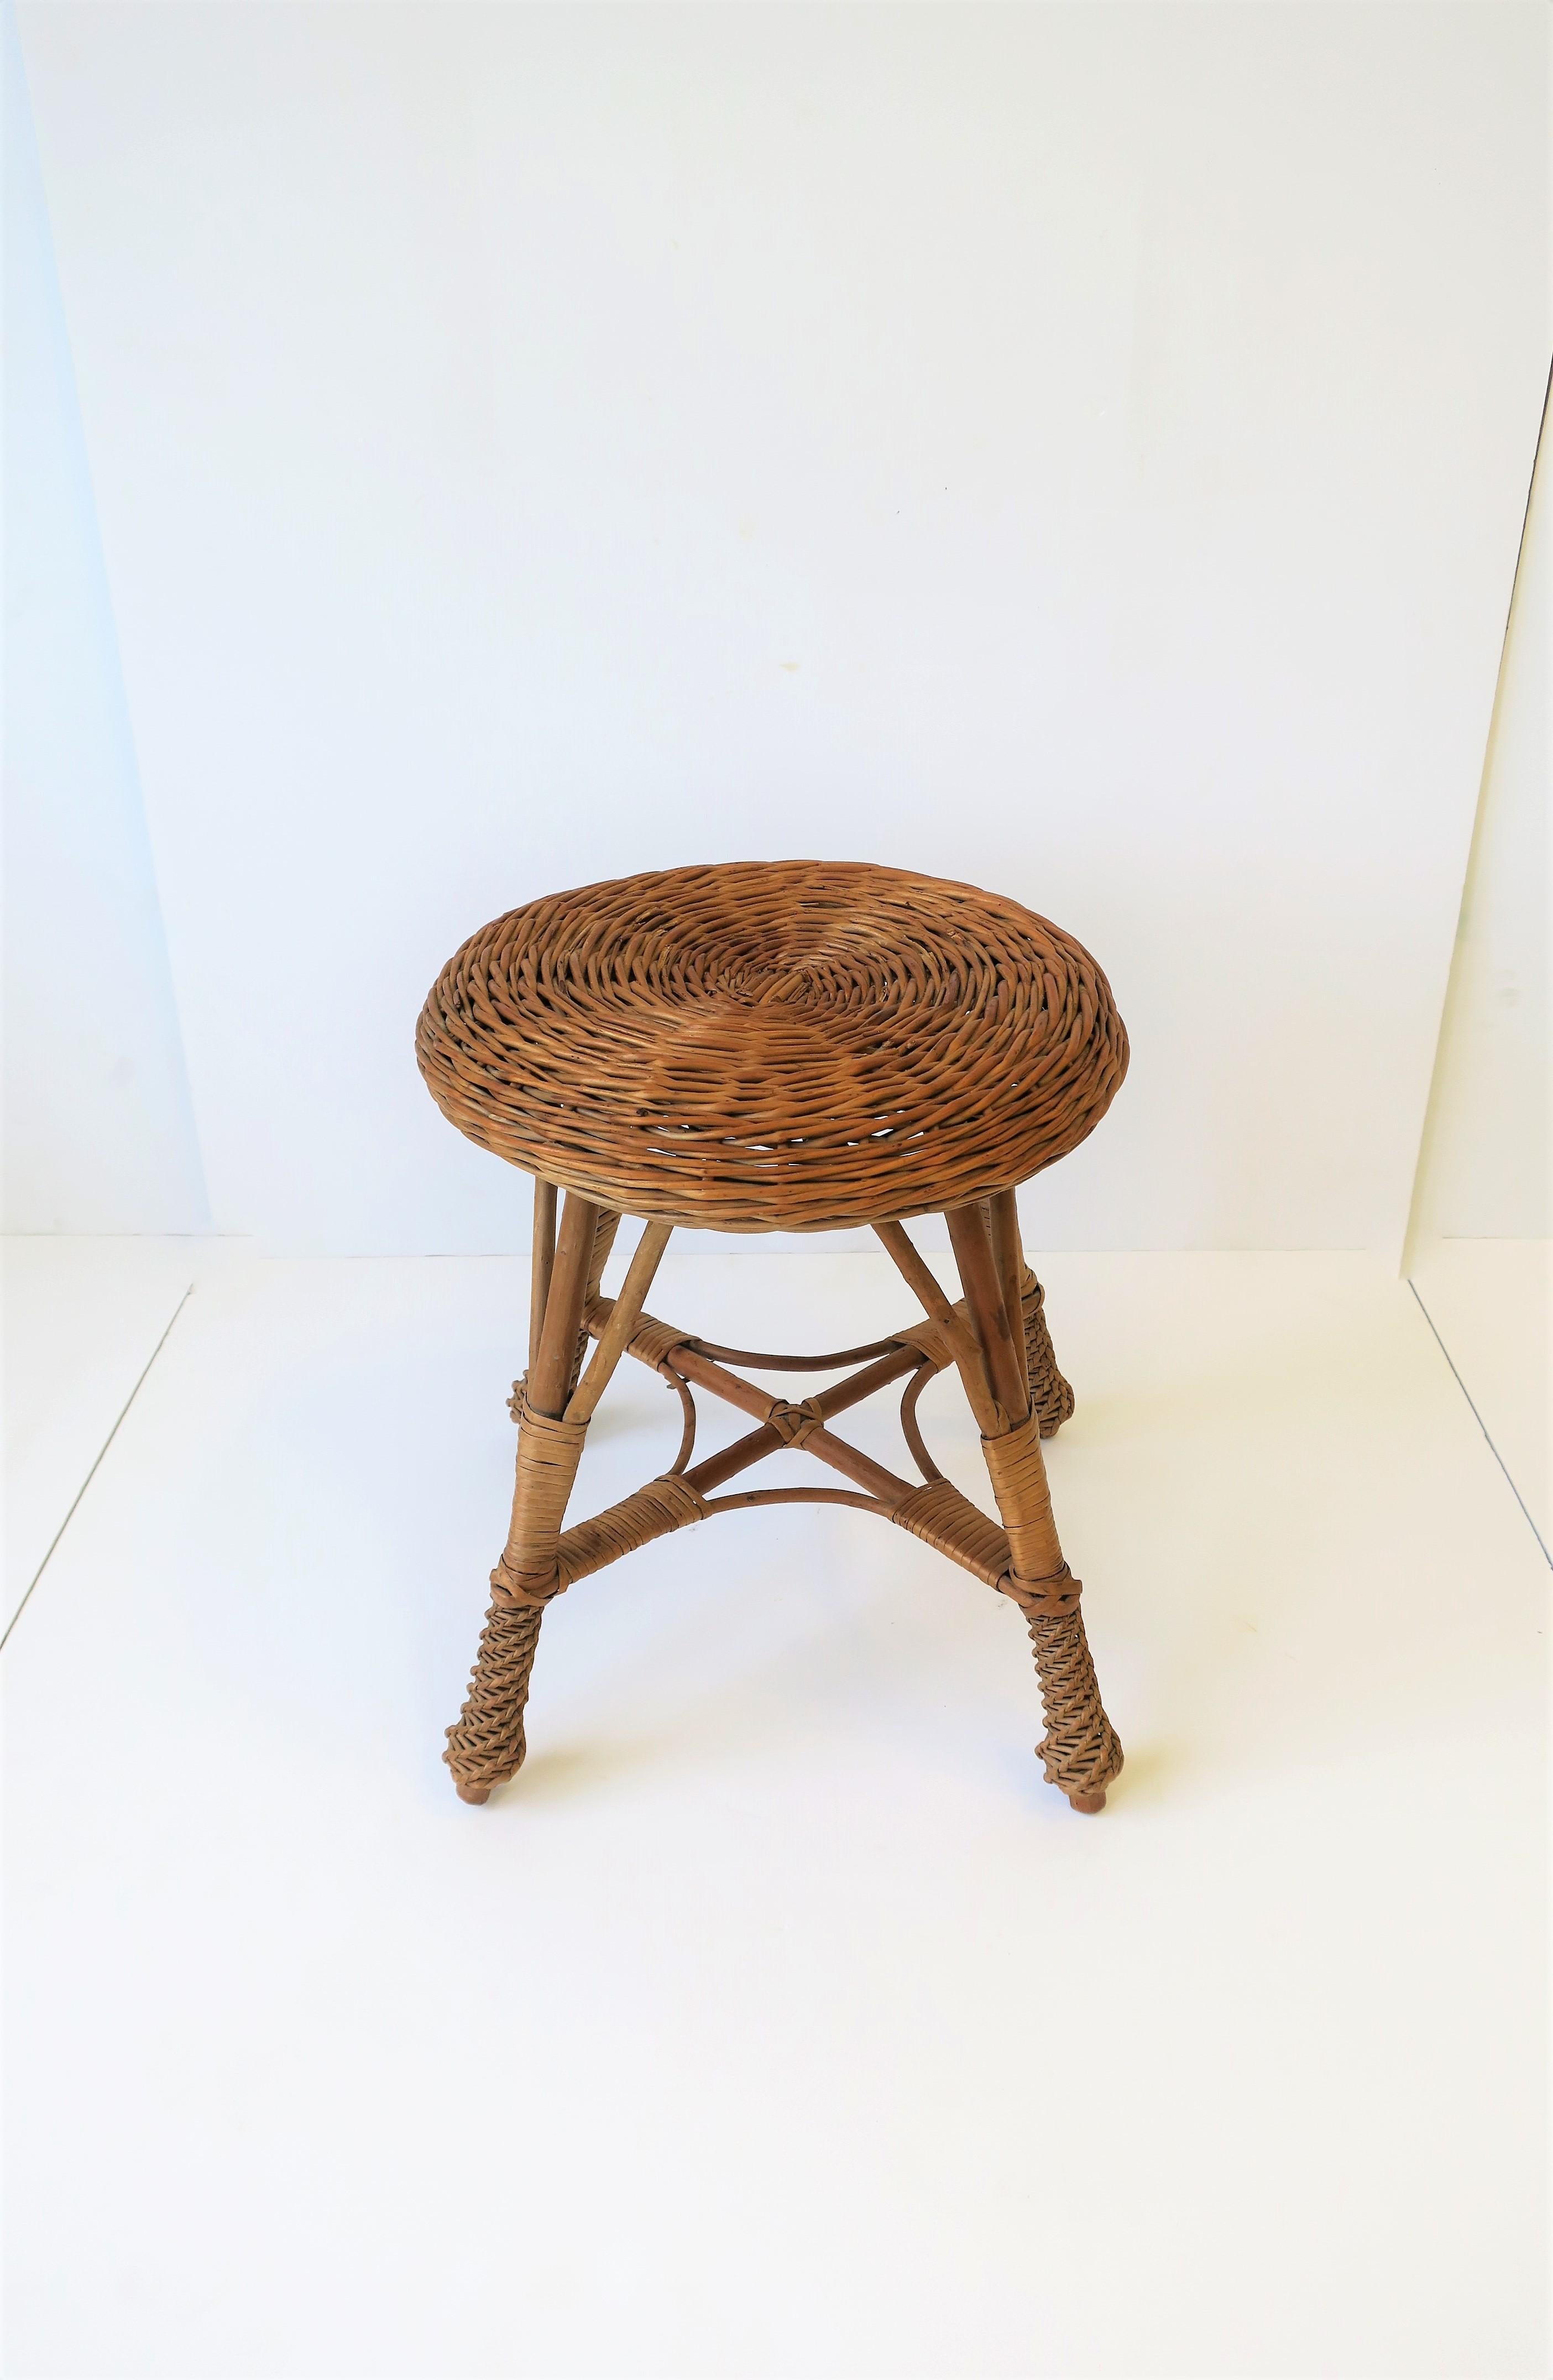 A vintage midcentury round wicker stool, footstool, low side or drinks table. 

Piece measures: 11.5 in. diameter x 13 in. height.

